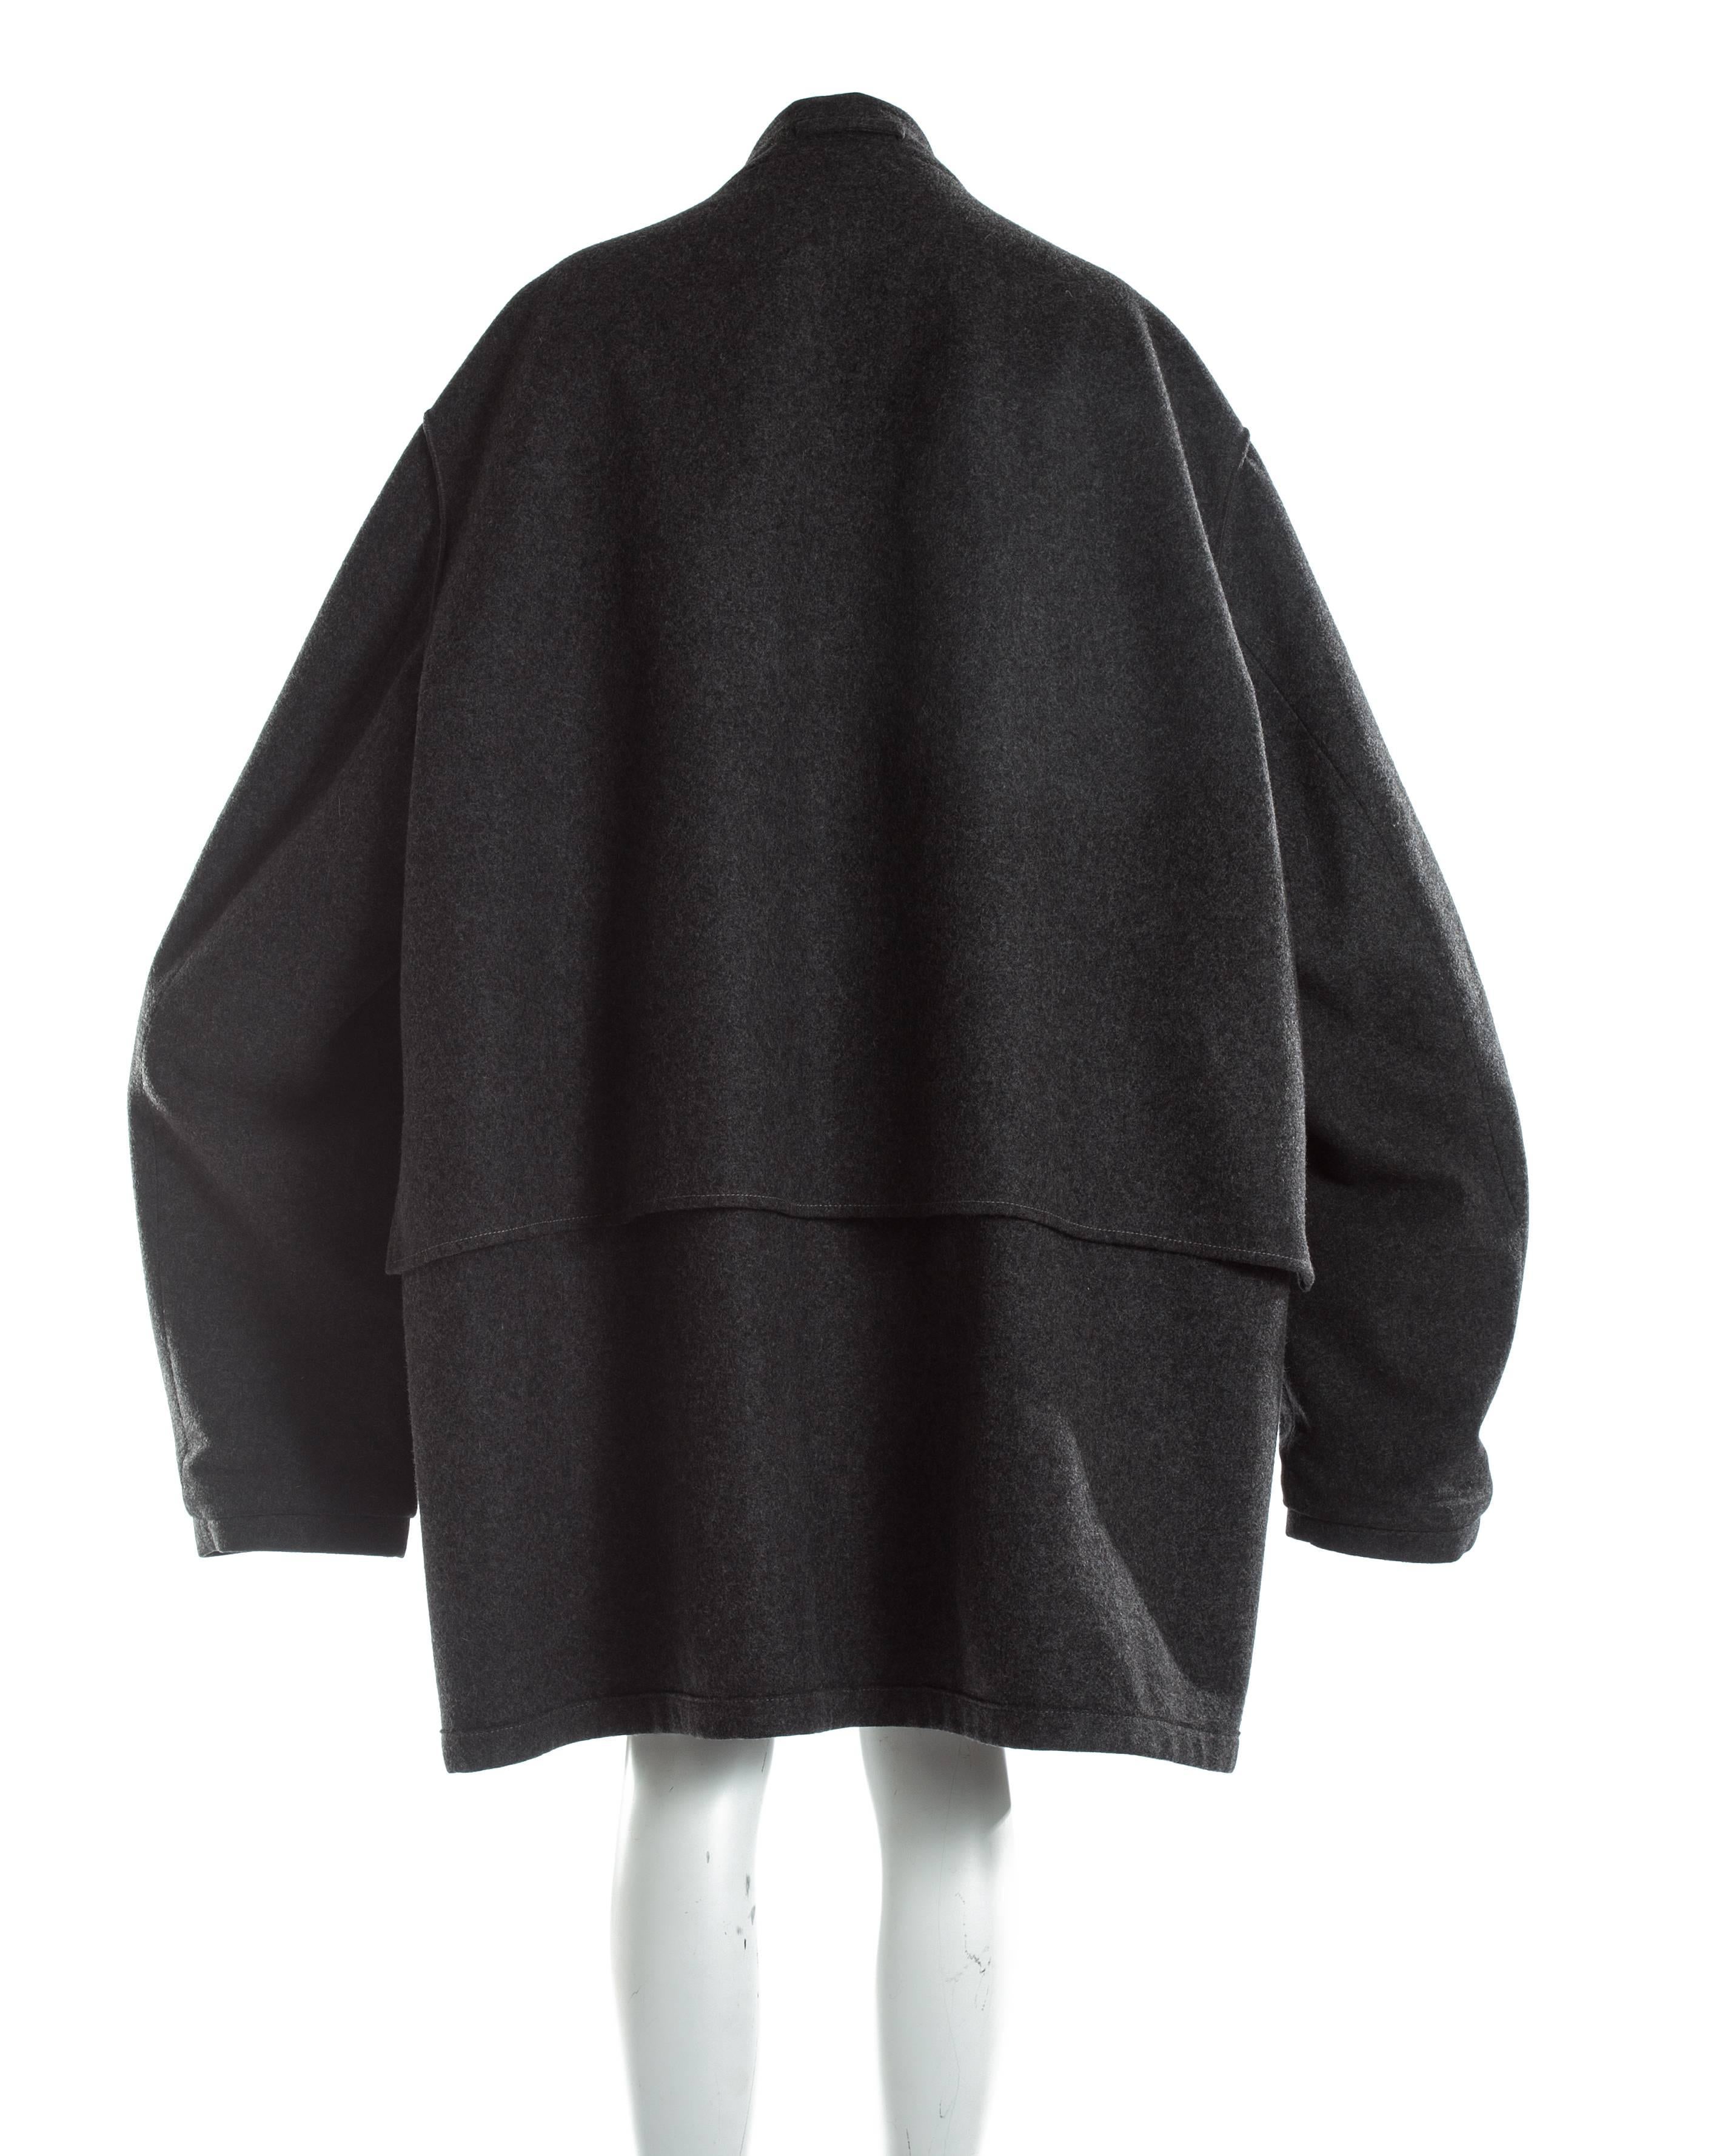 Margiela charcoal melton wool overcoat, A / W 2000 1